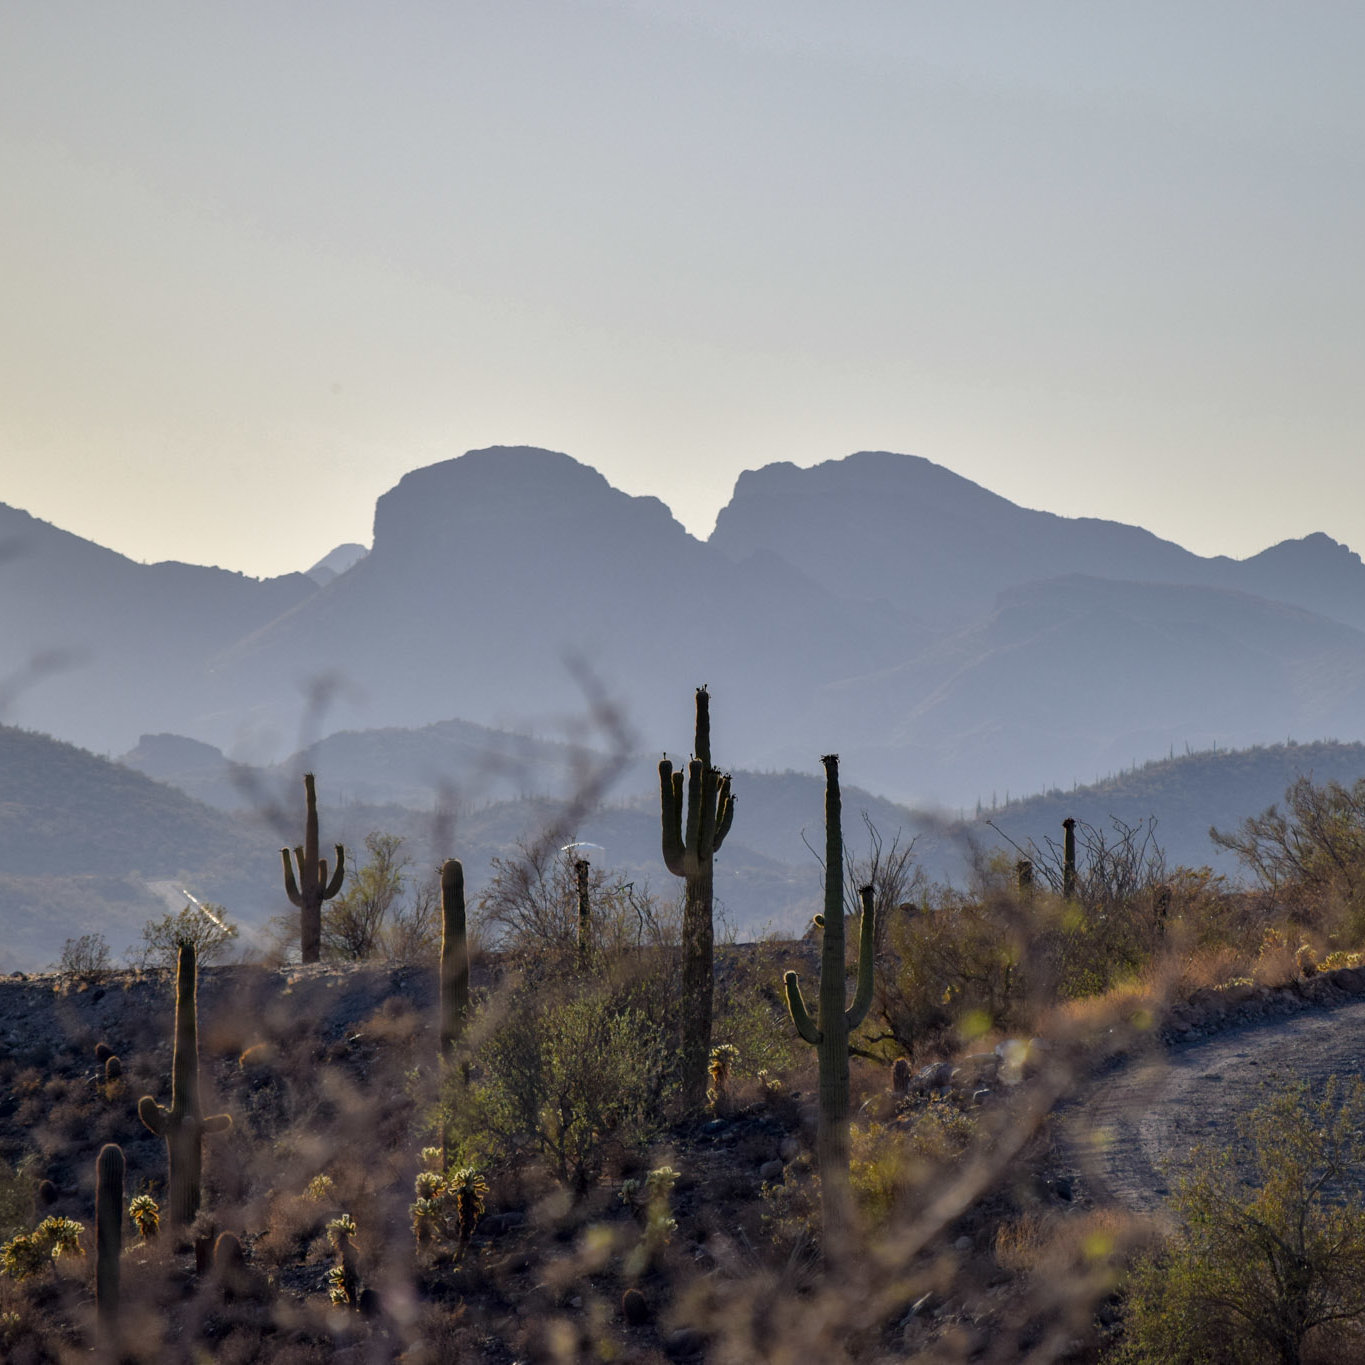 Mountains, Cactuse, Arizona